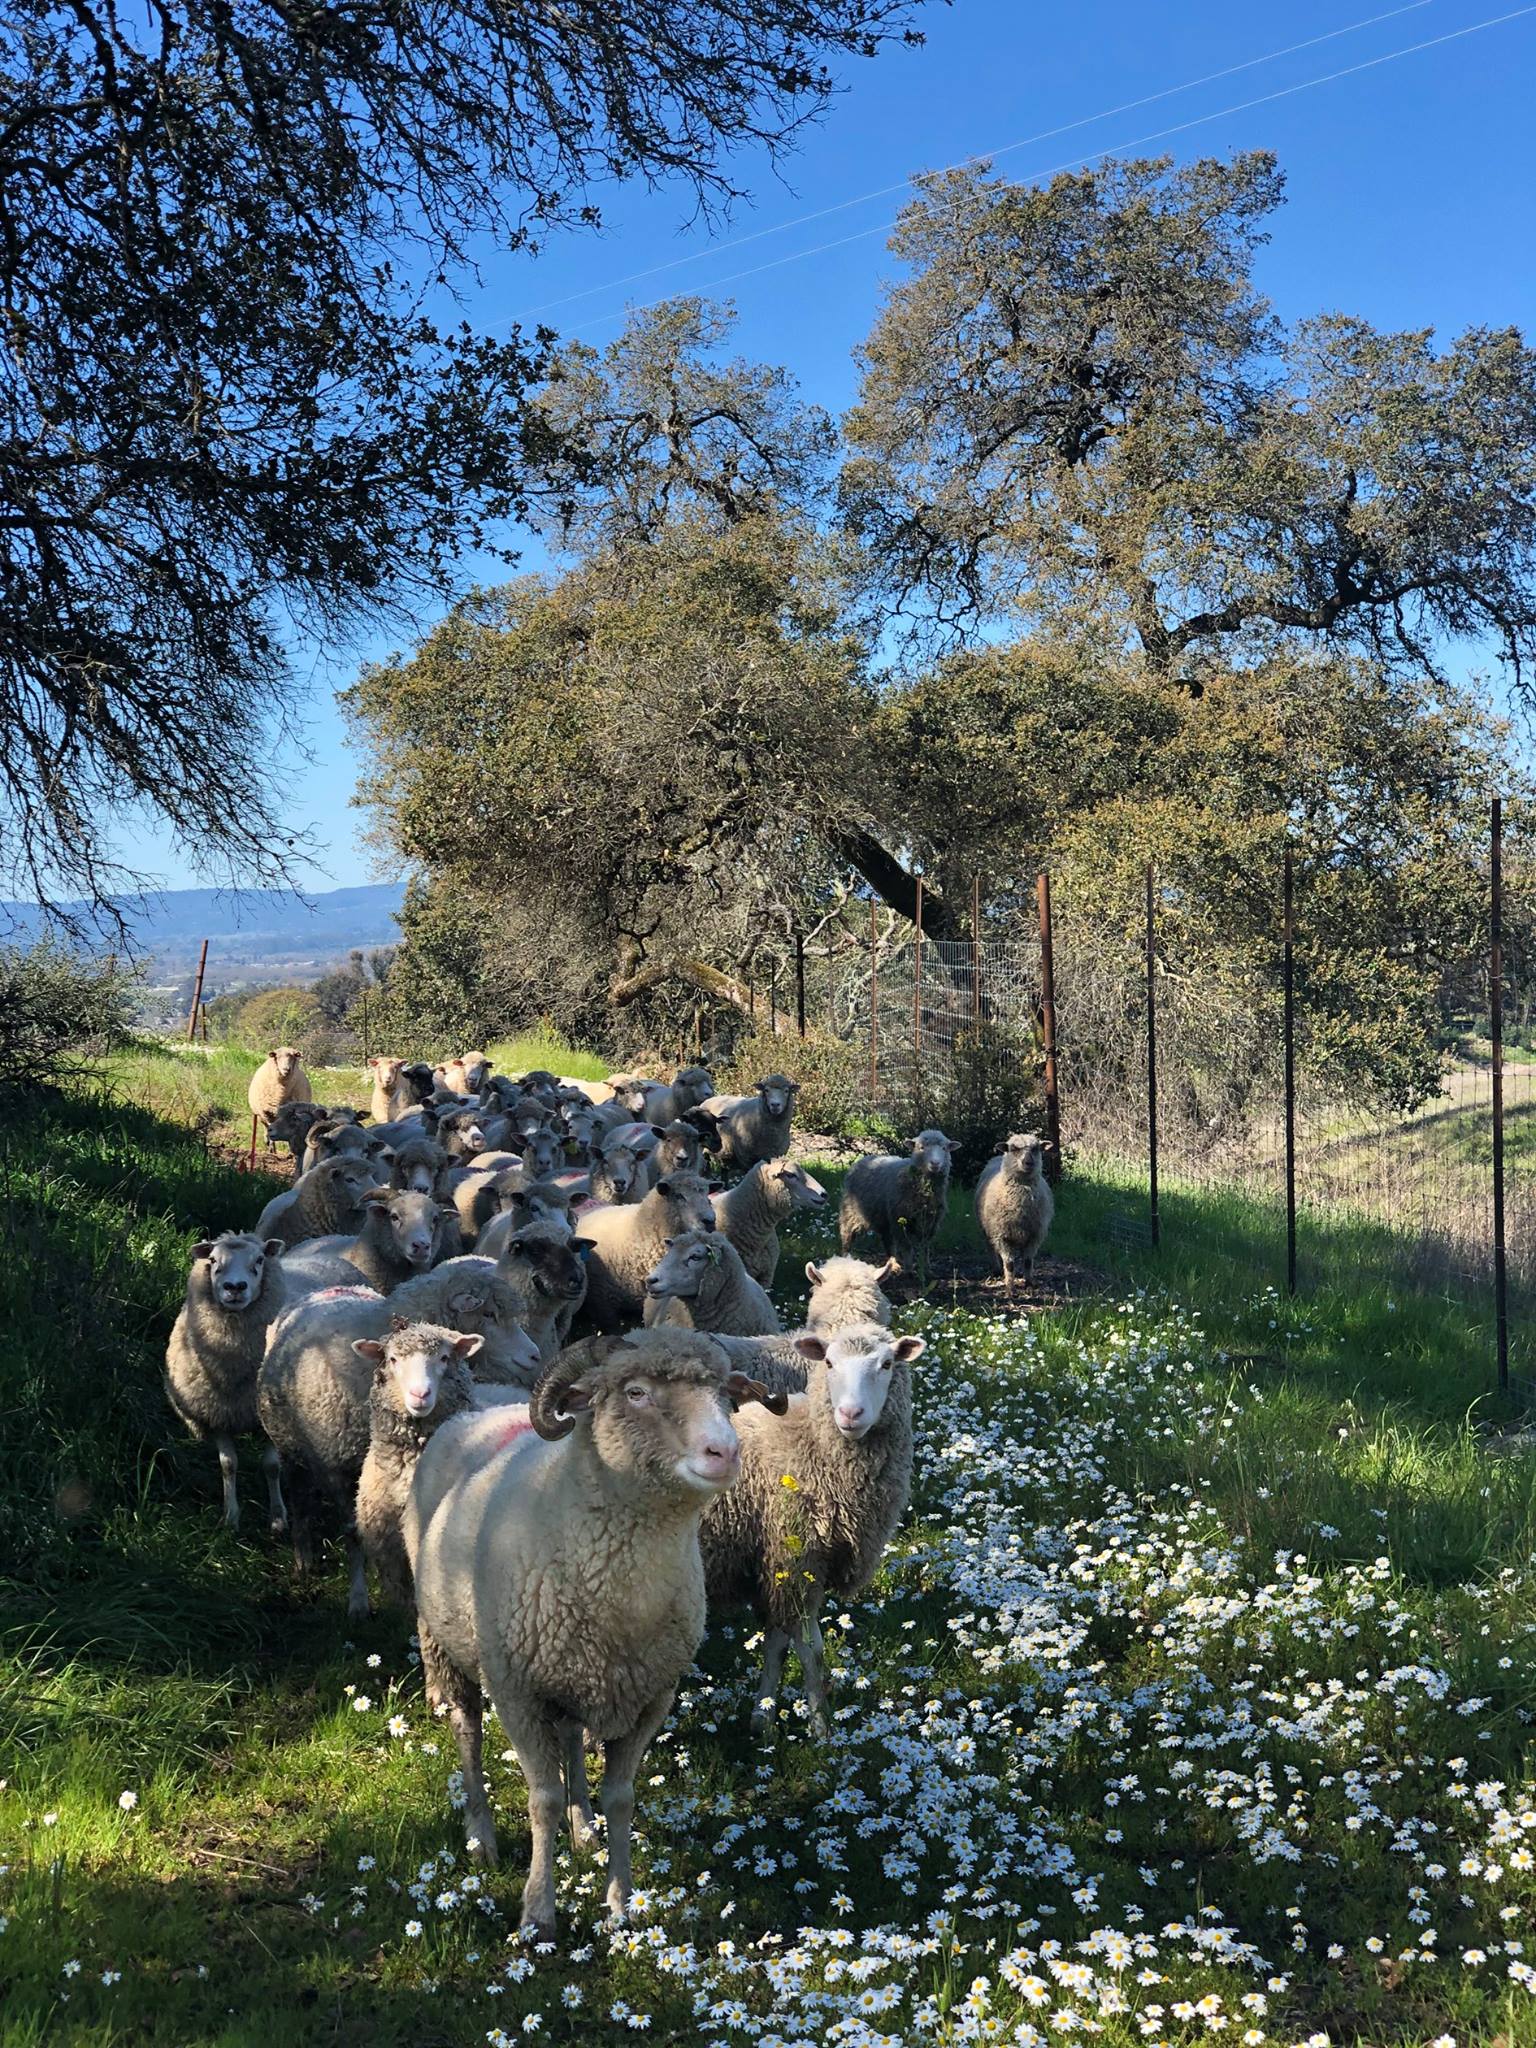 A heard of Paradise Ridge Sheep